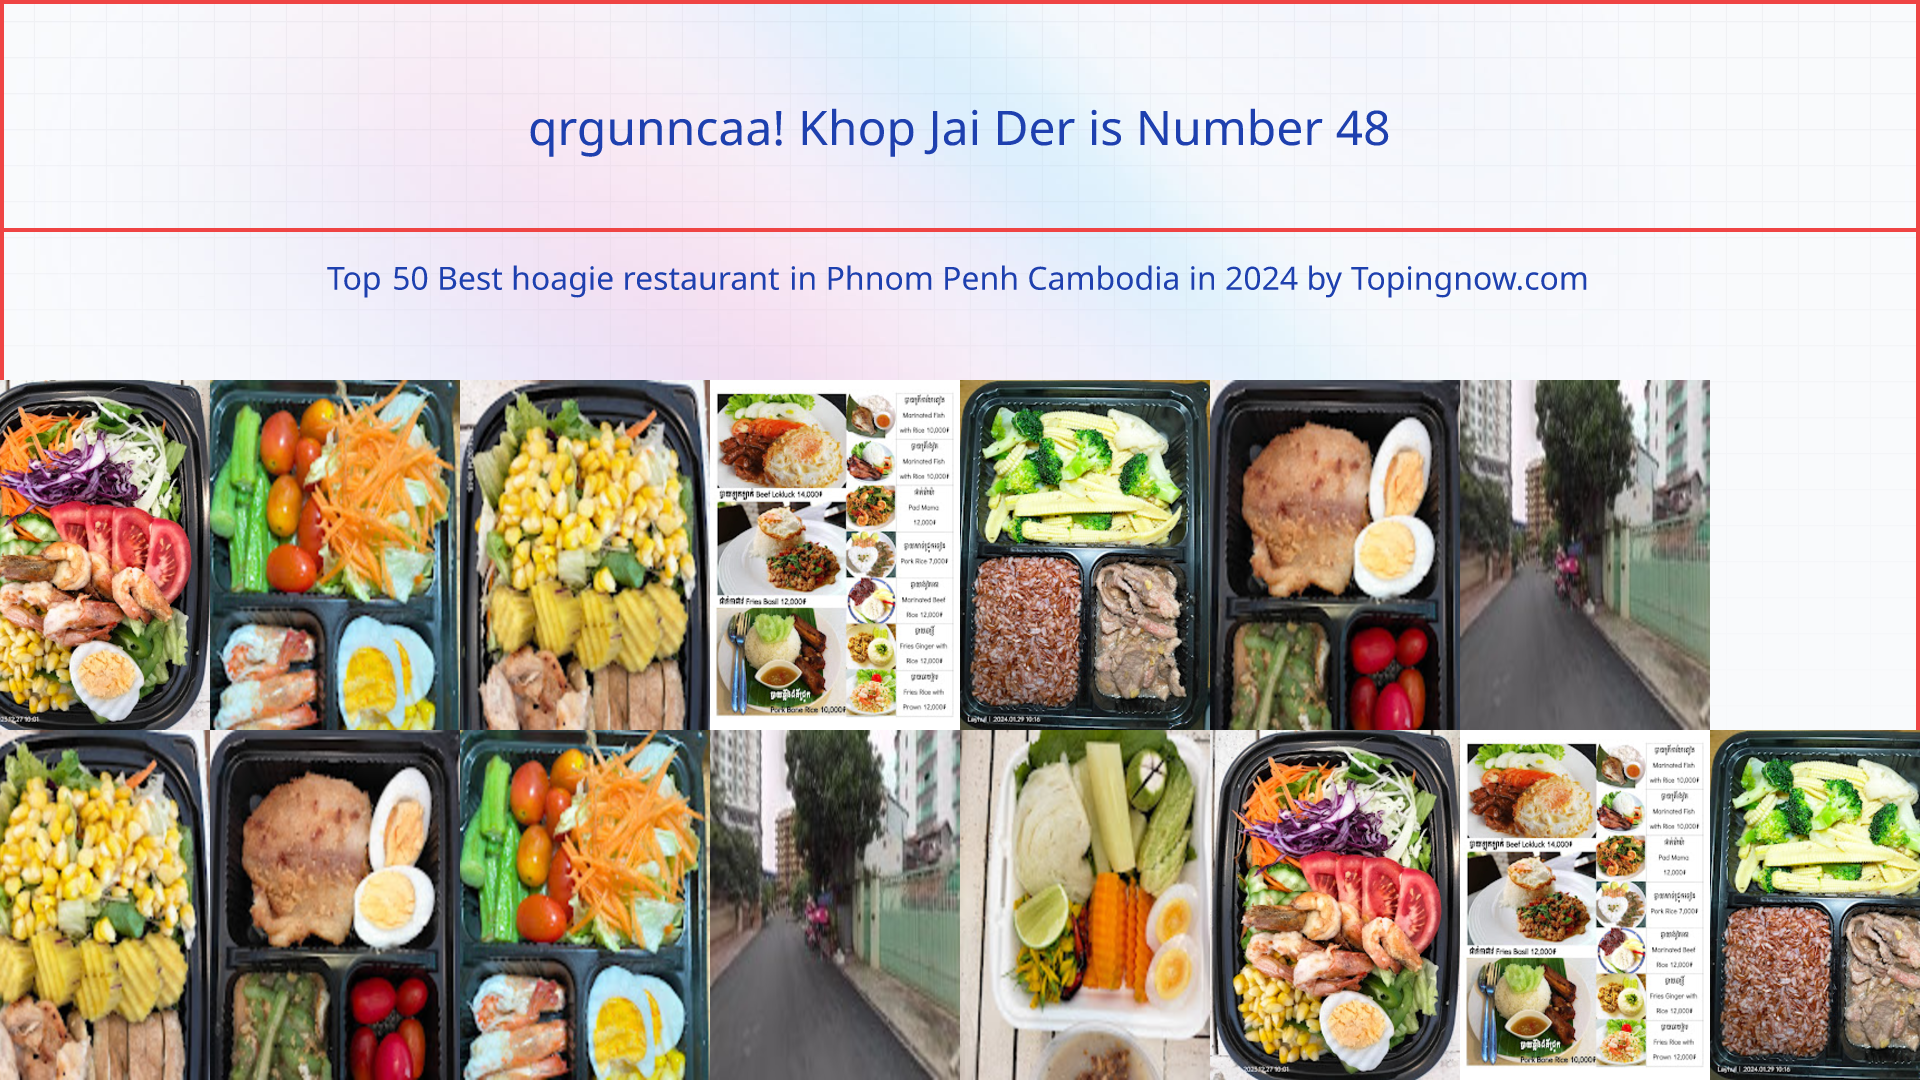 qrgunncaa! Khop Jai Der: Top 50 Best hoagie restaurant in Phnom Penh Cambodia in 2024